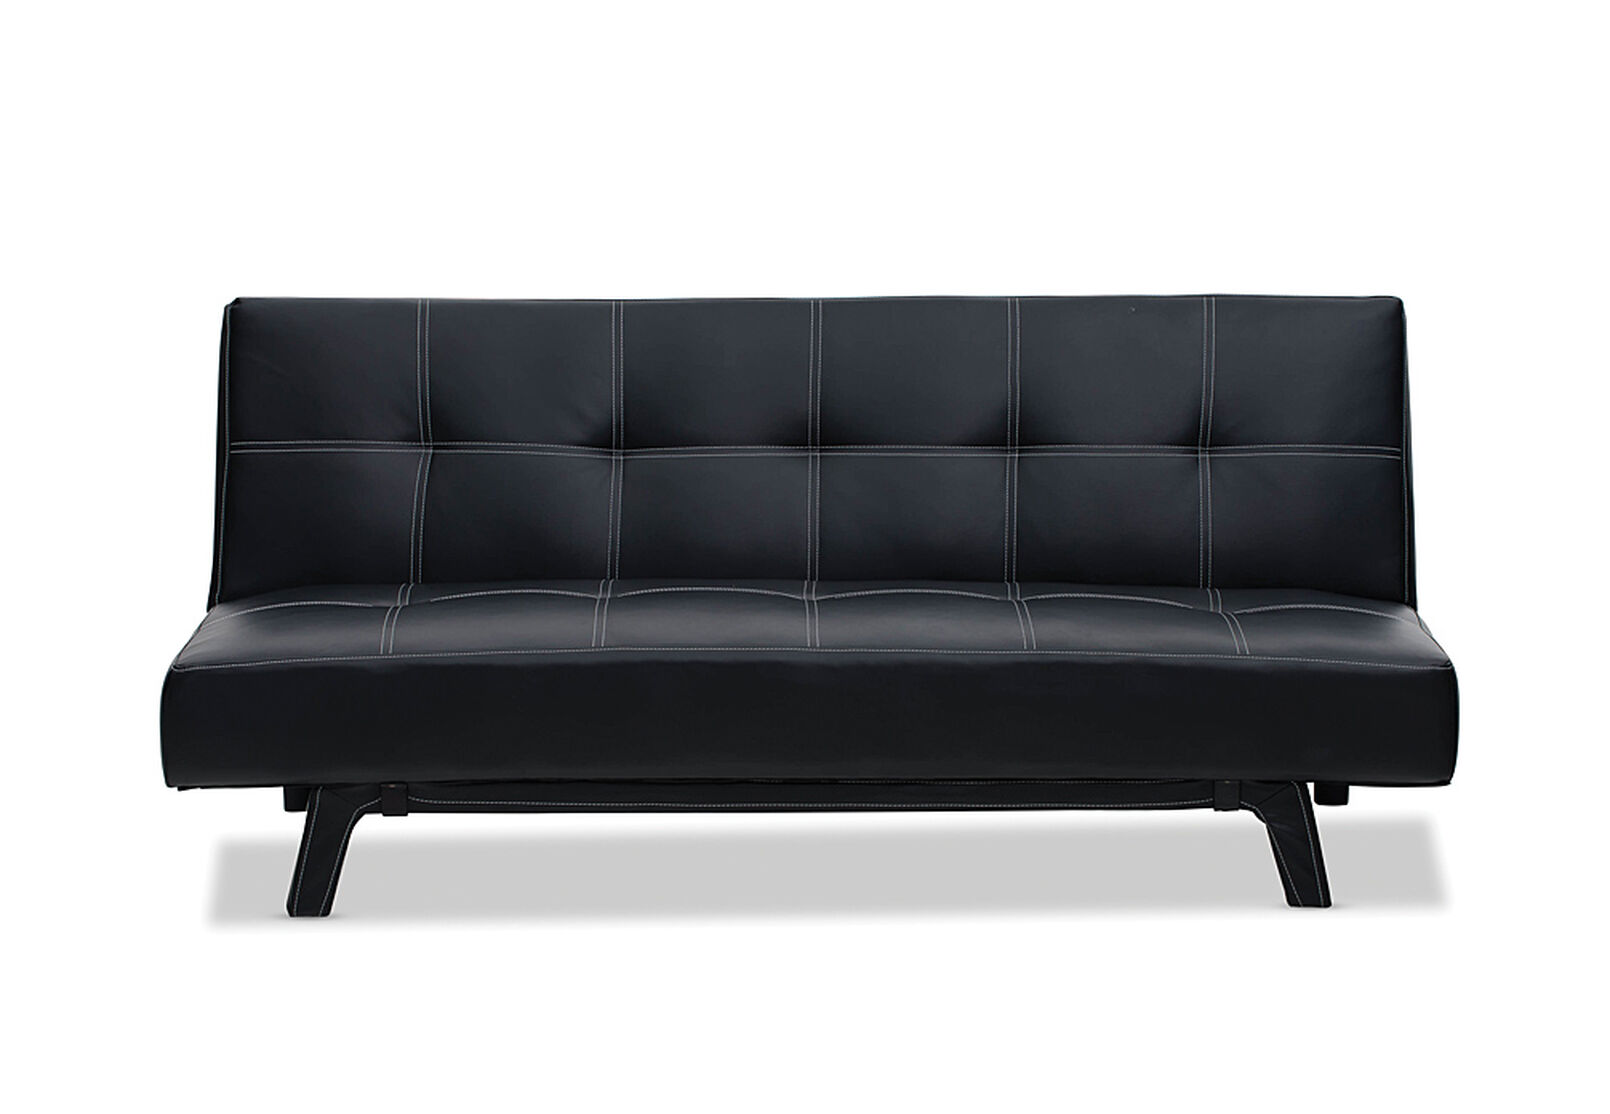 Clack Sofa Bed Amart Furniture, Black Leather Futon